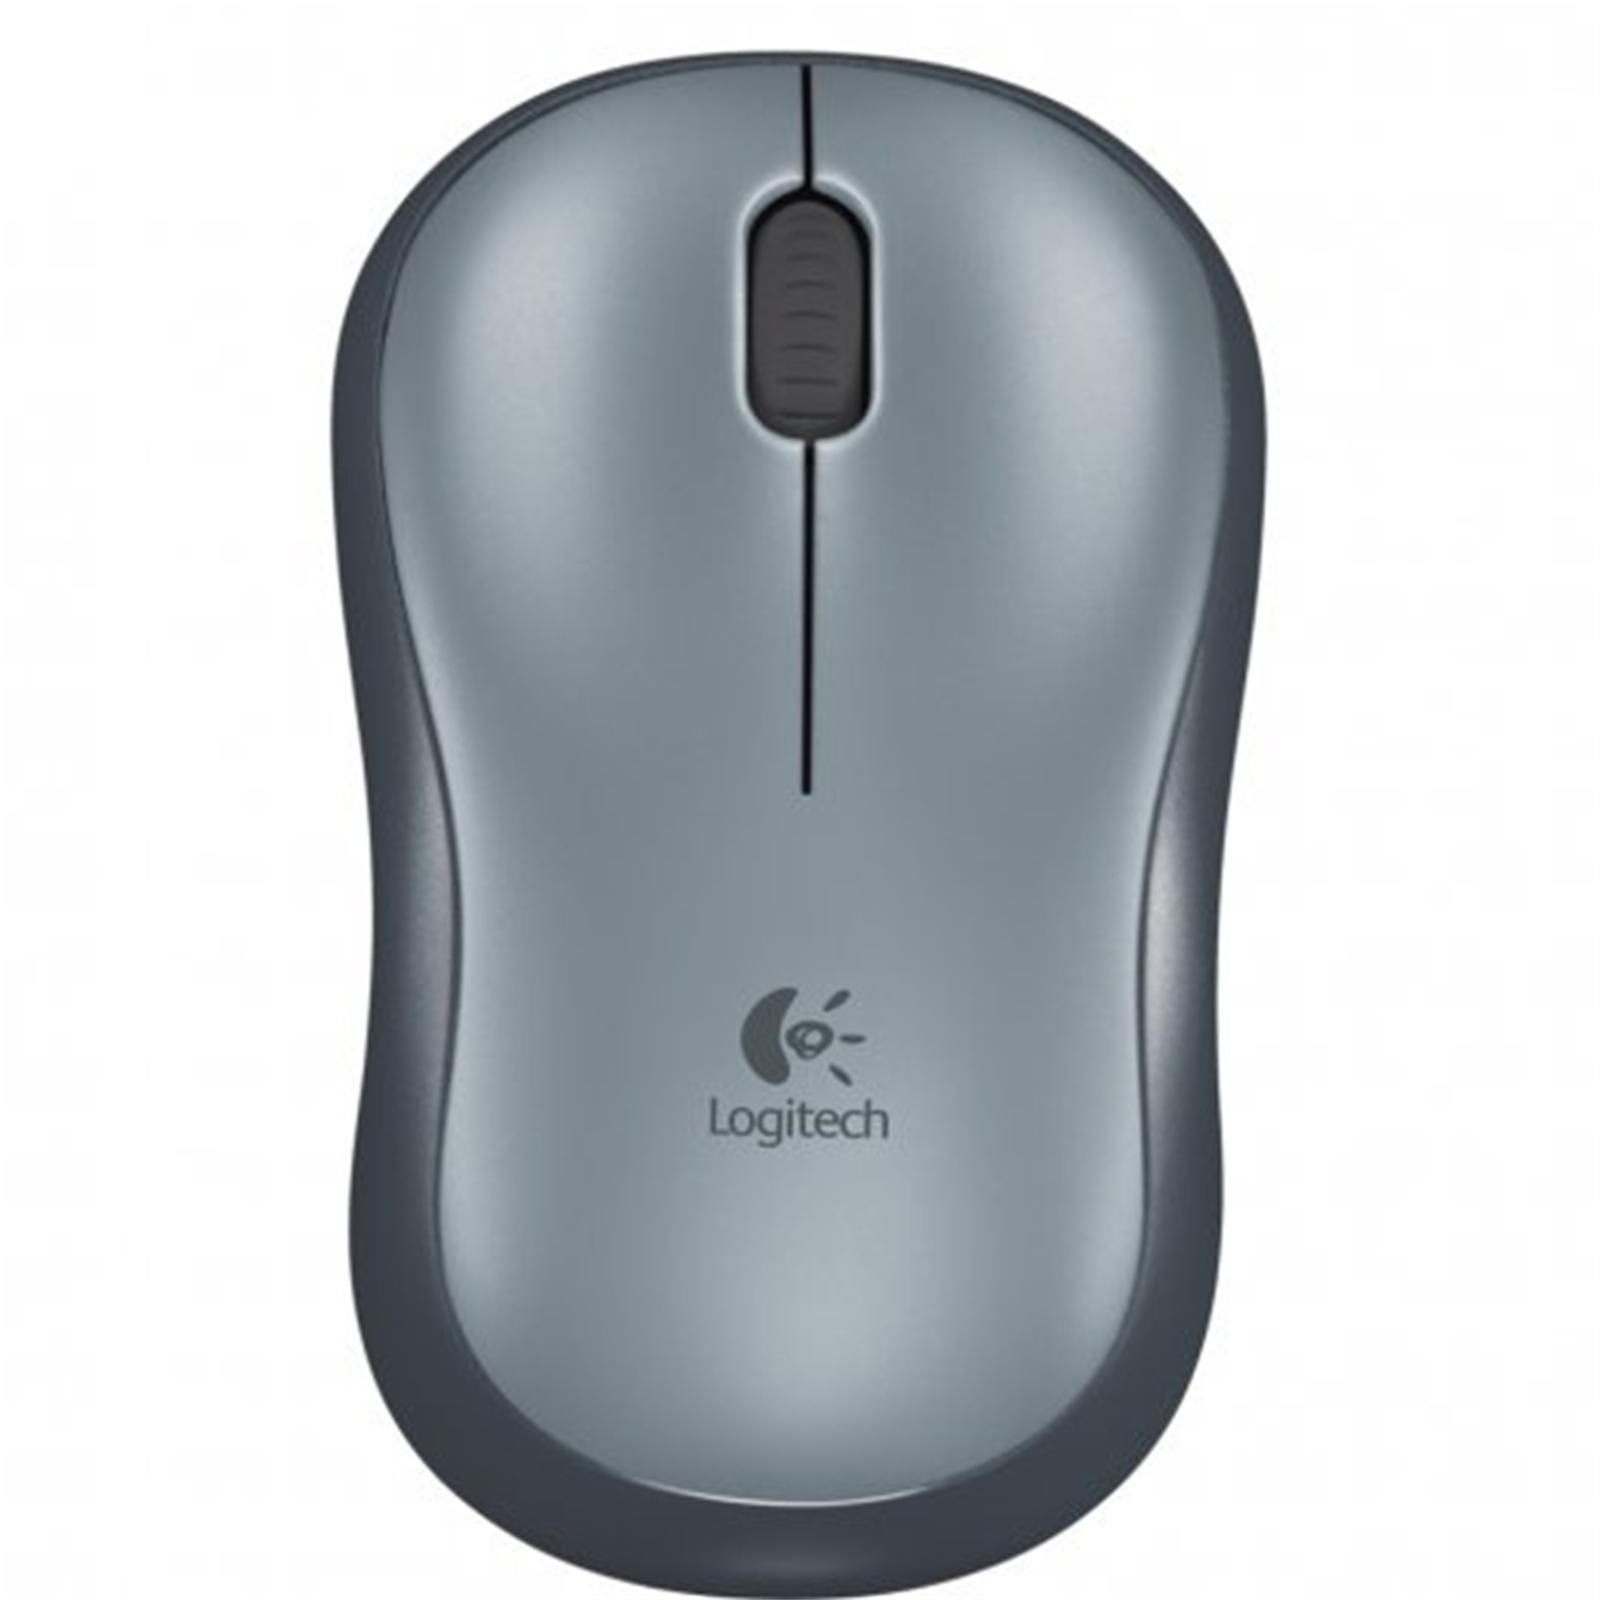 Logitech Wireless mouse m185 g